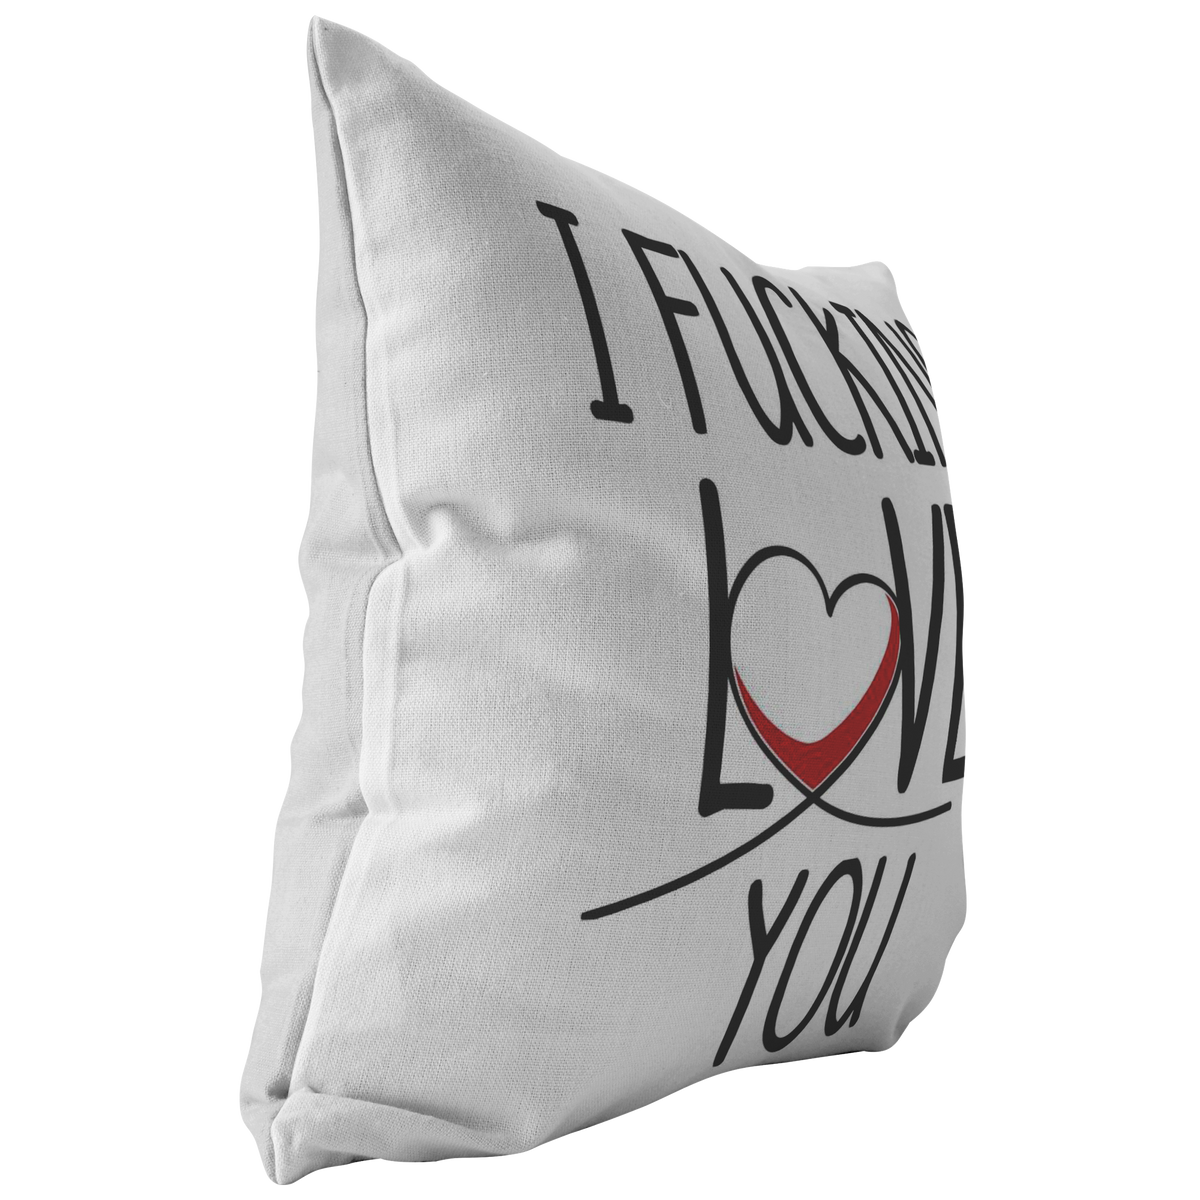 I Fucking Love You Throw Pillow